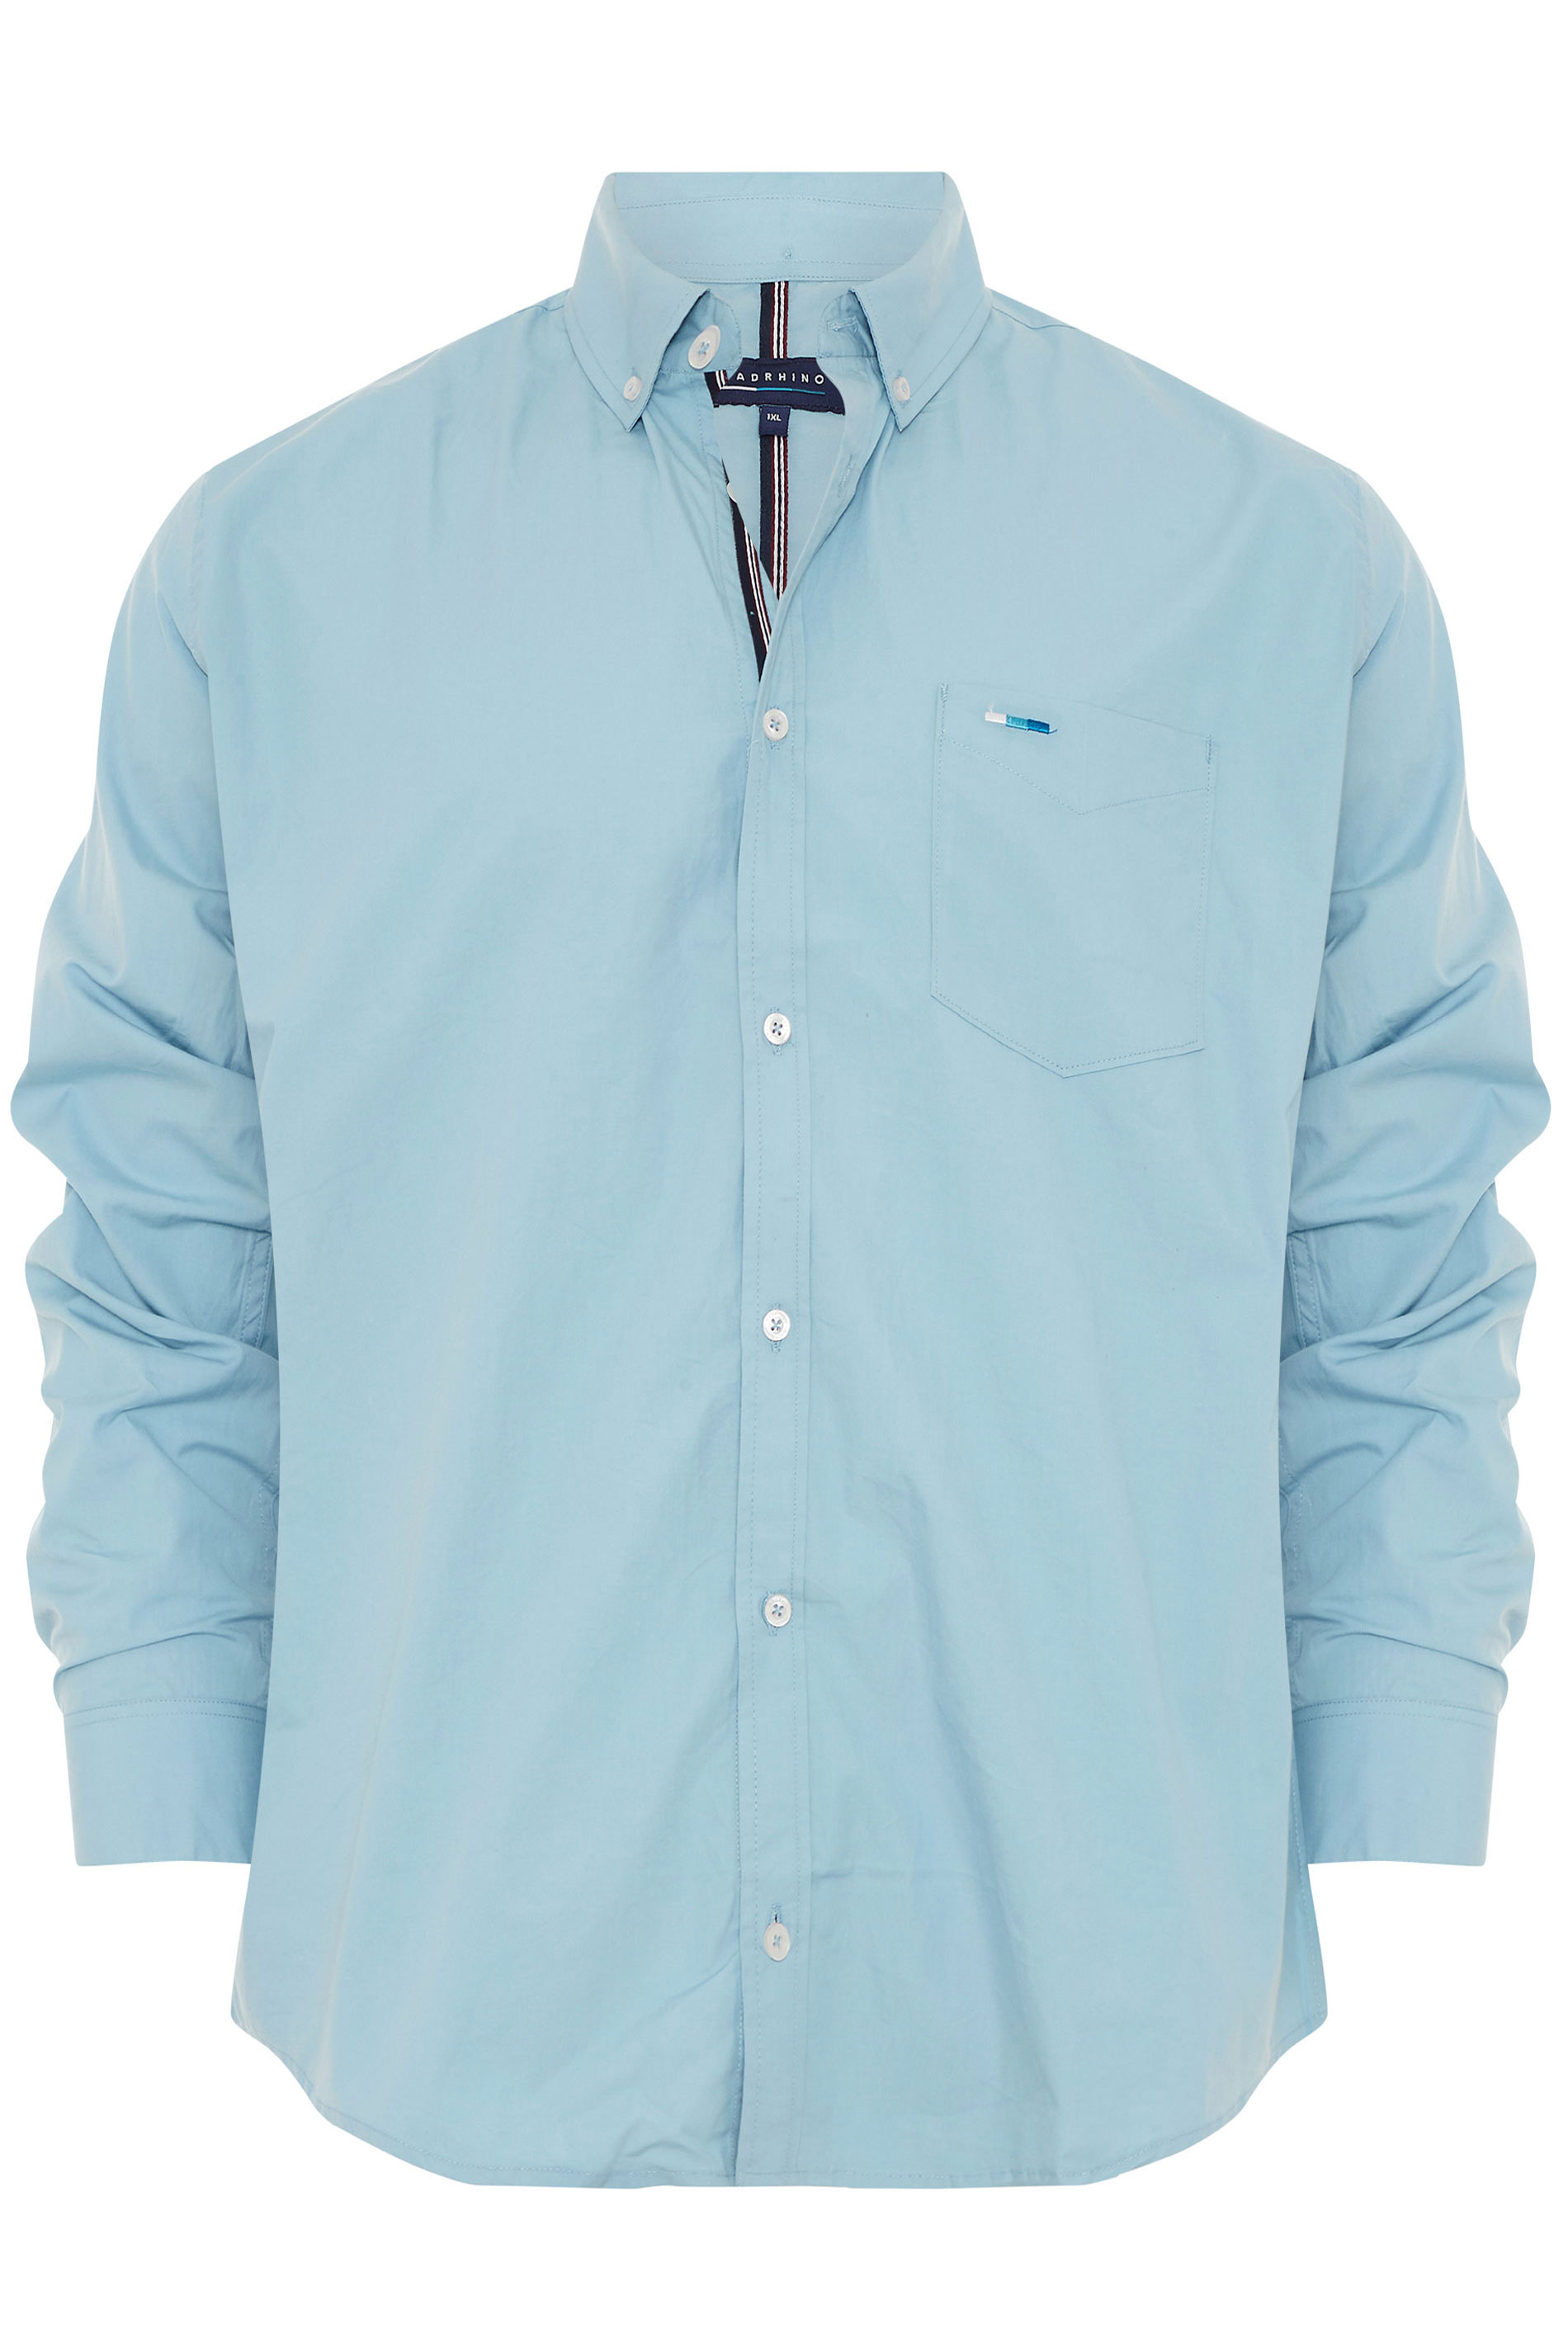 BadRhino Big & Tall Light Blue Poplin Long Sleeve Shirt | BadRhino 2